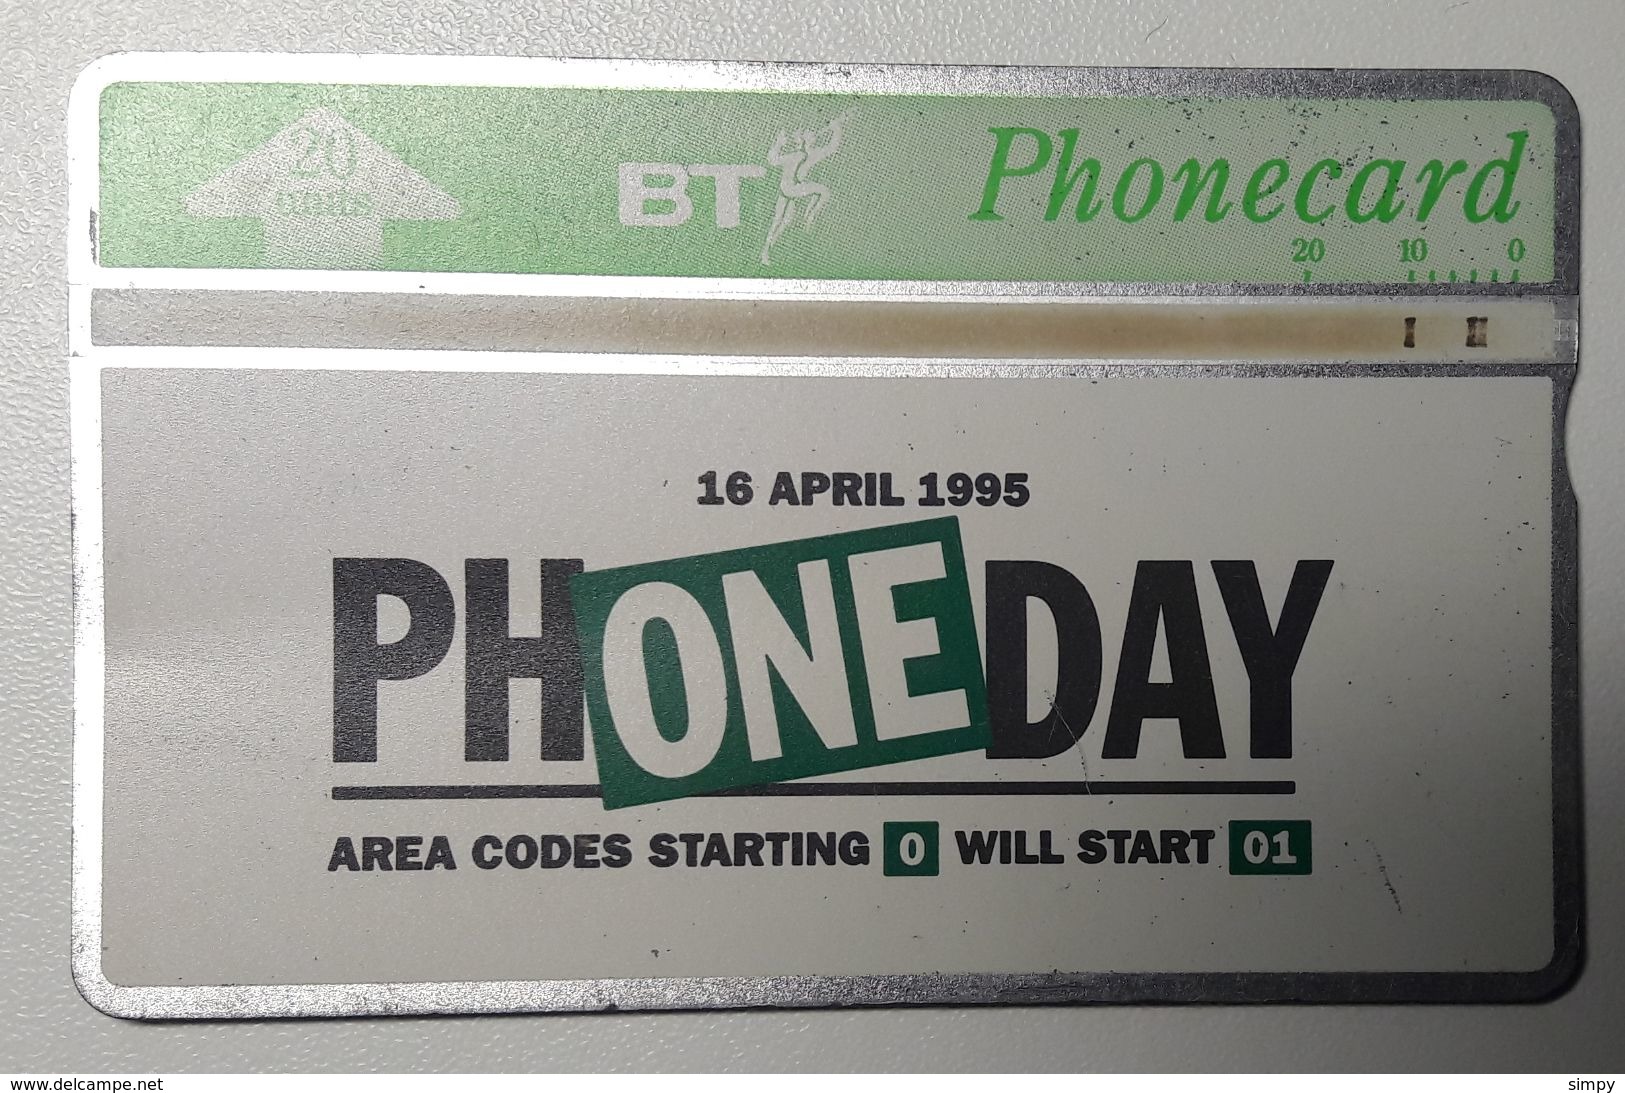 United Kingdom BT Phone Day 16.4.1995  Magnet Phone Card 20 Units - BT Global Cards (Prepagadas)